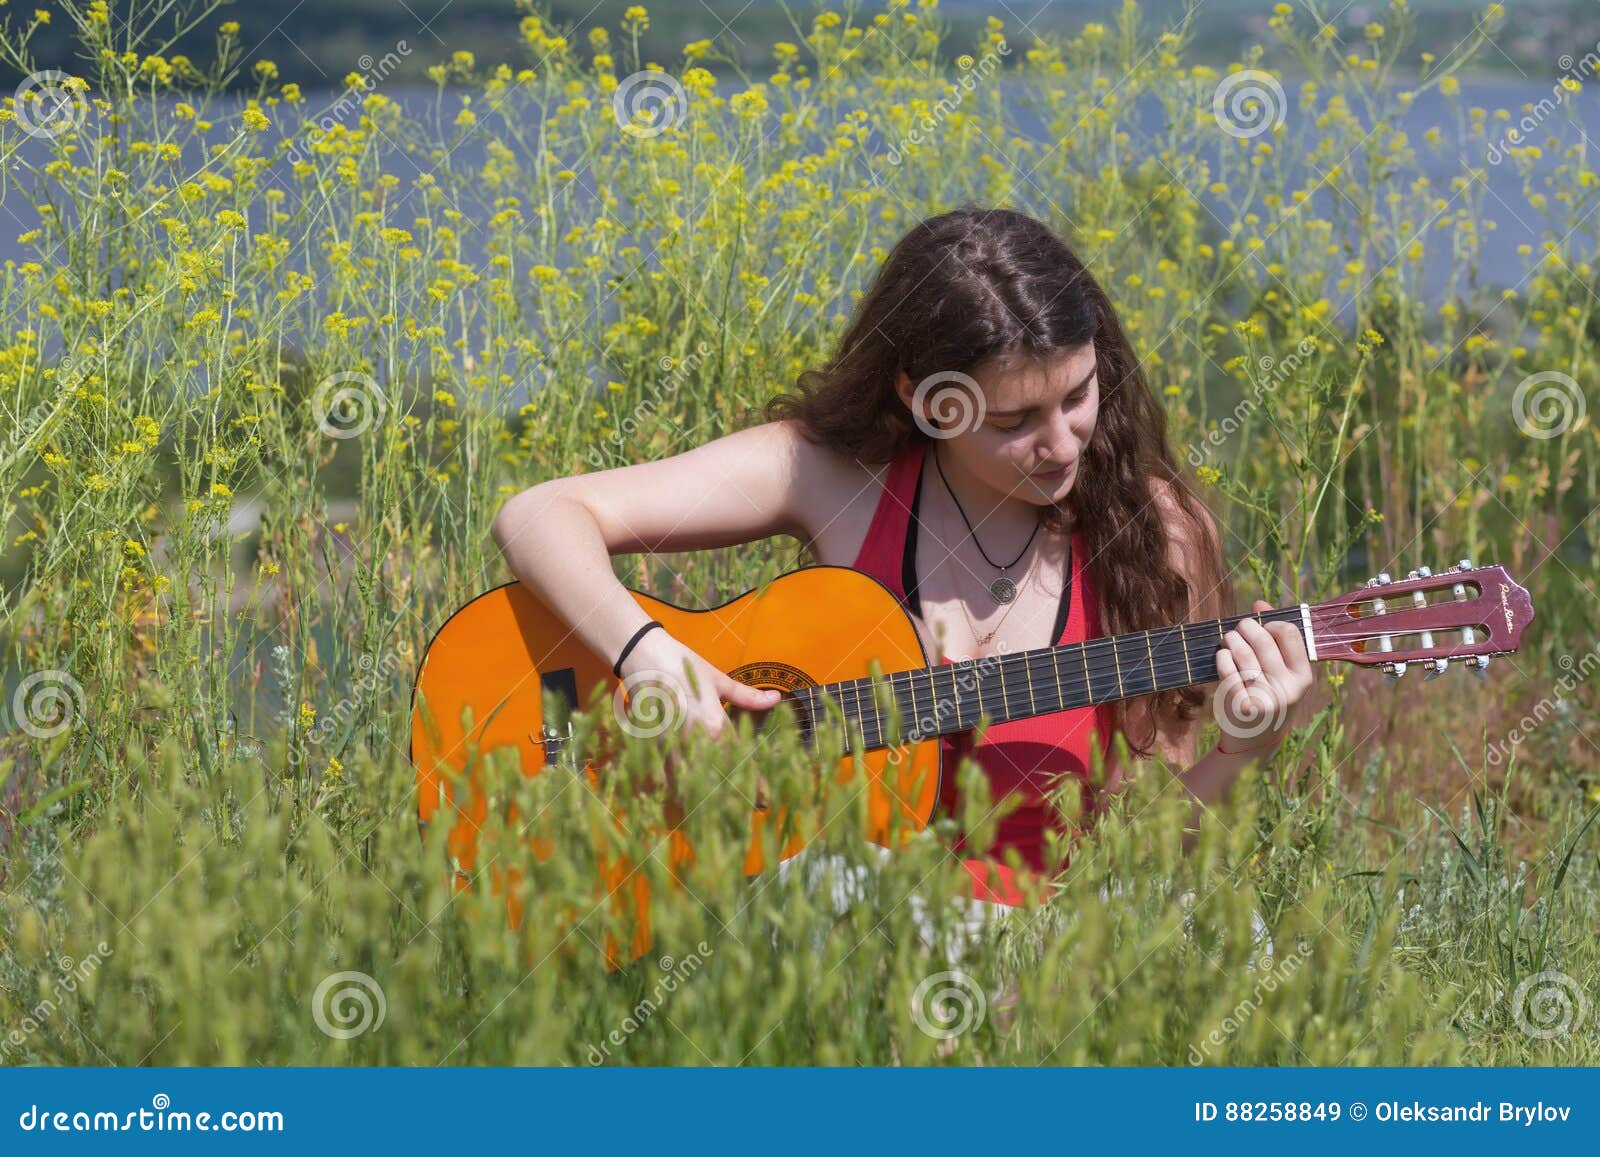 cute female musician sitting on green grass